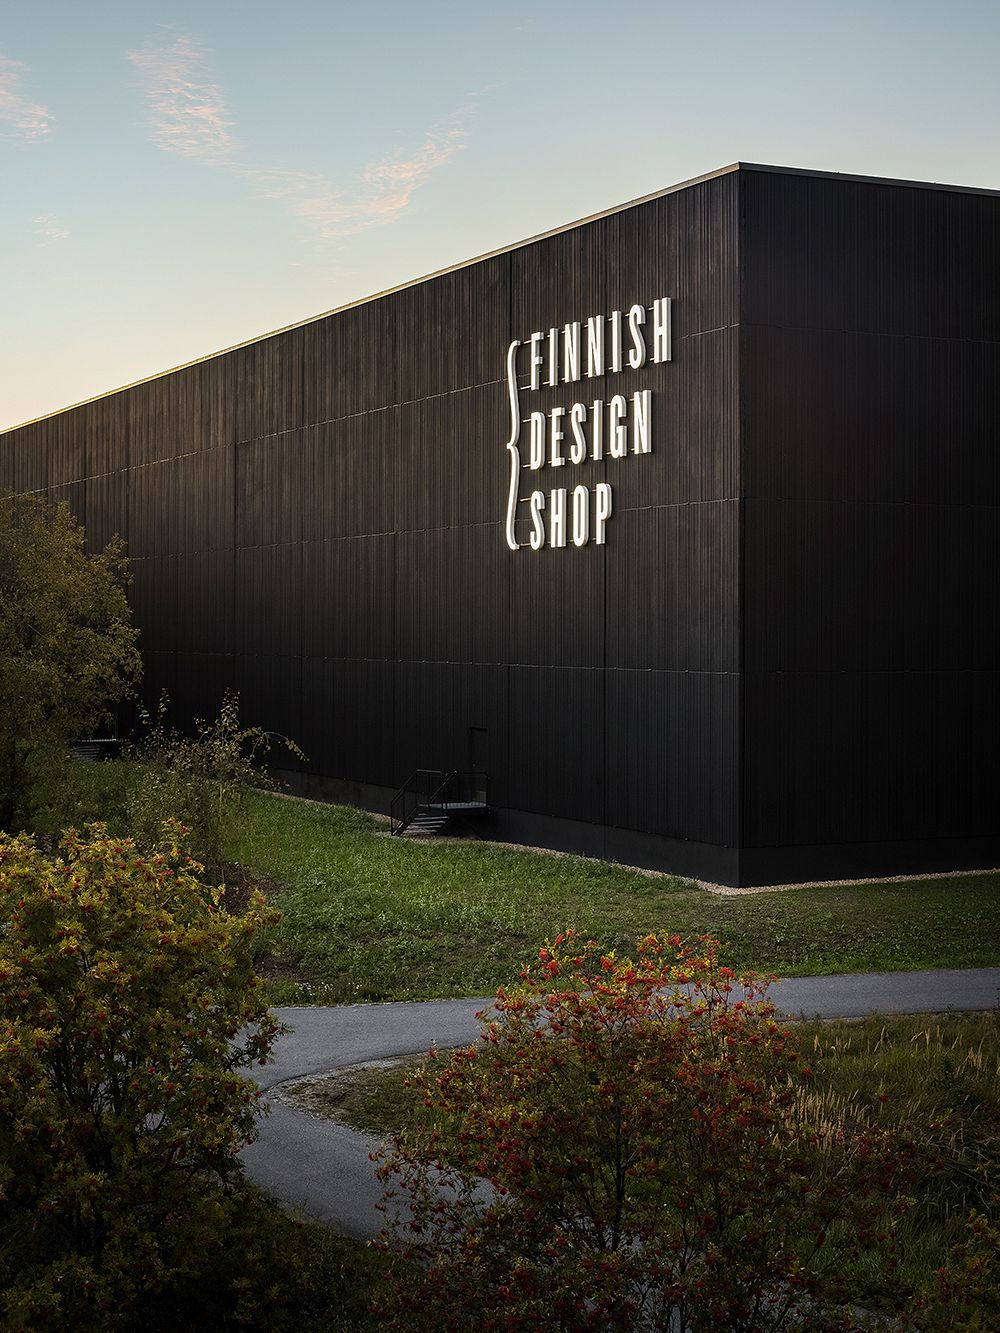 Finnish Design Shop’s logistic center, facade